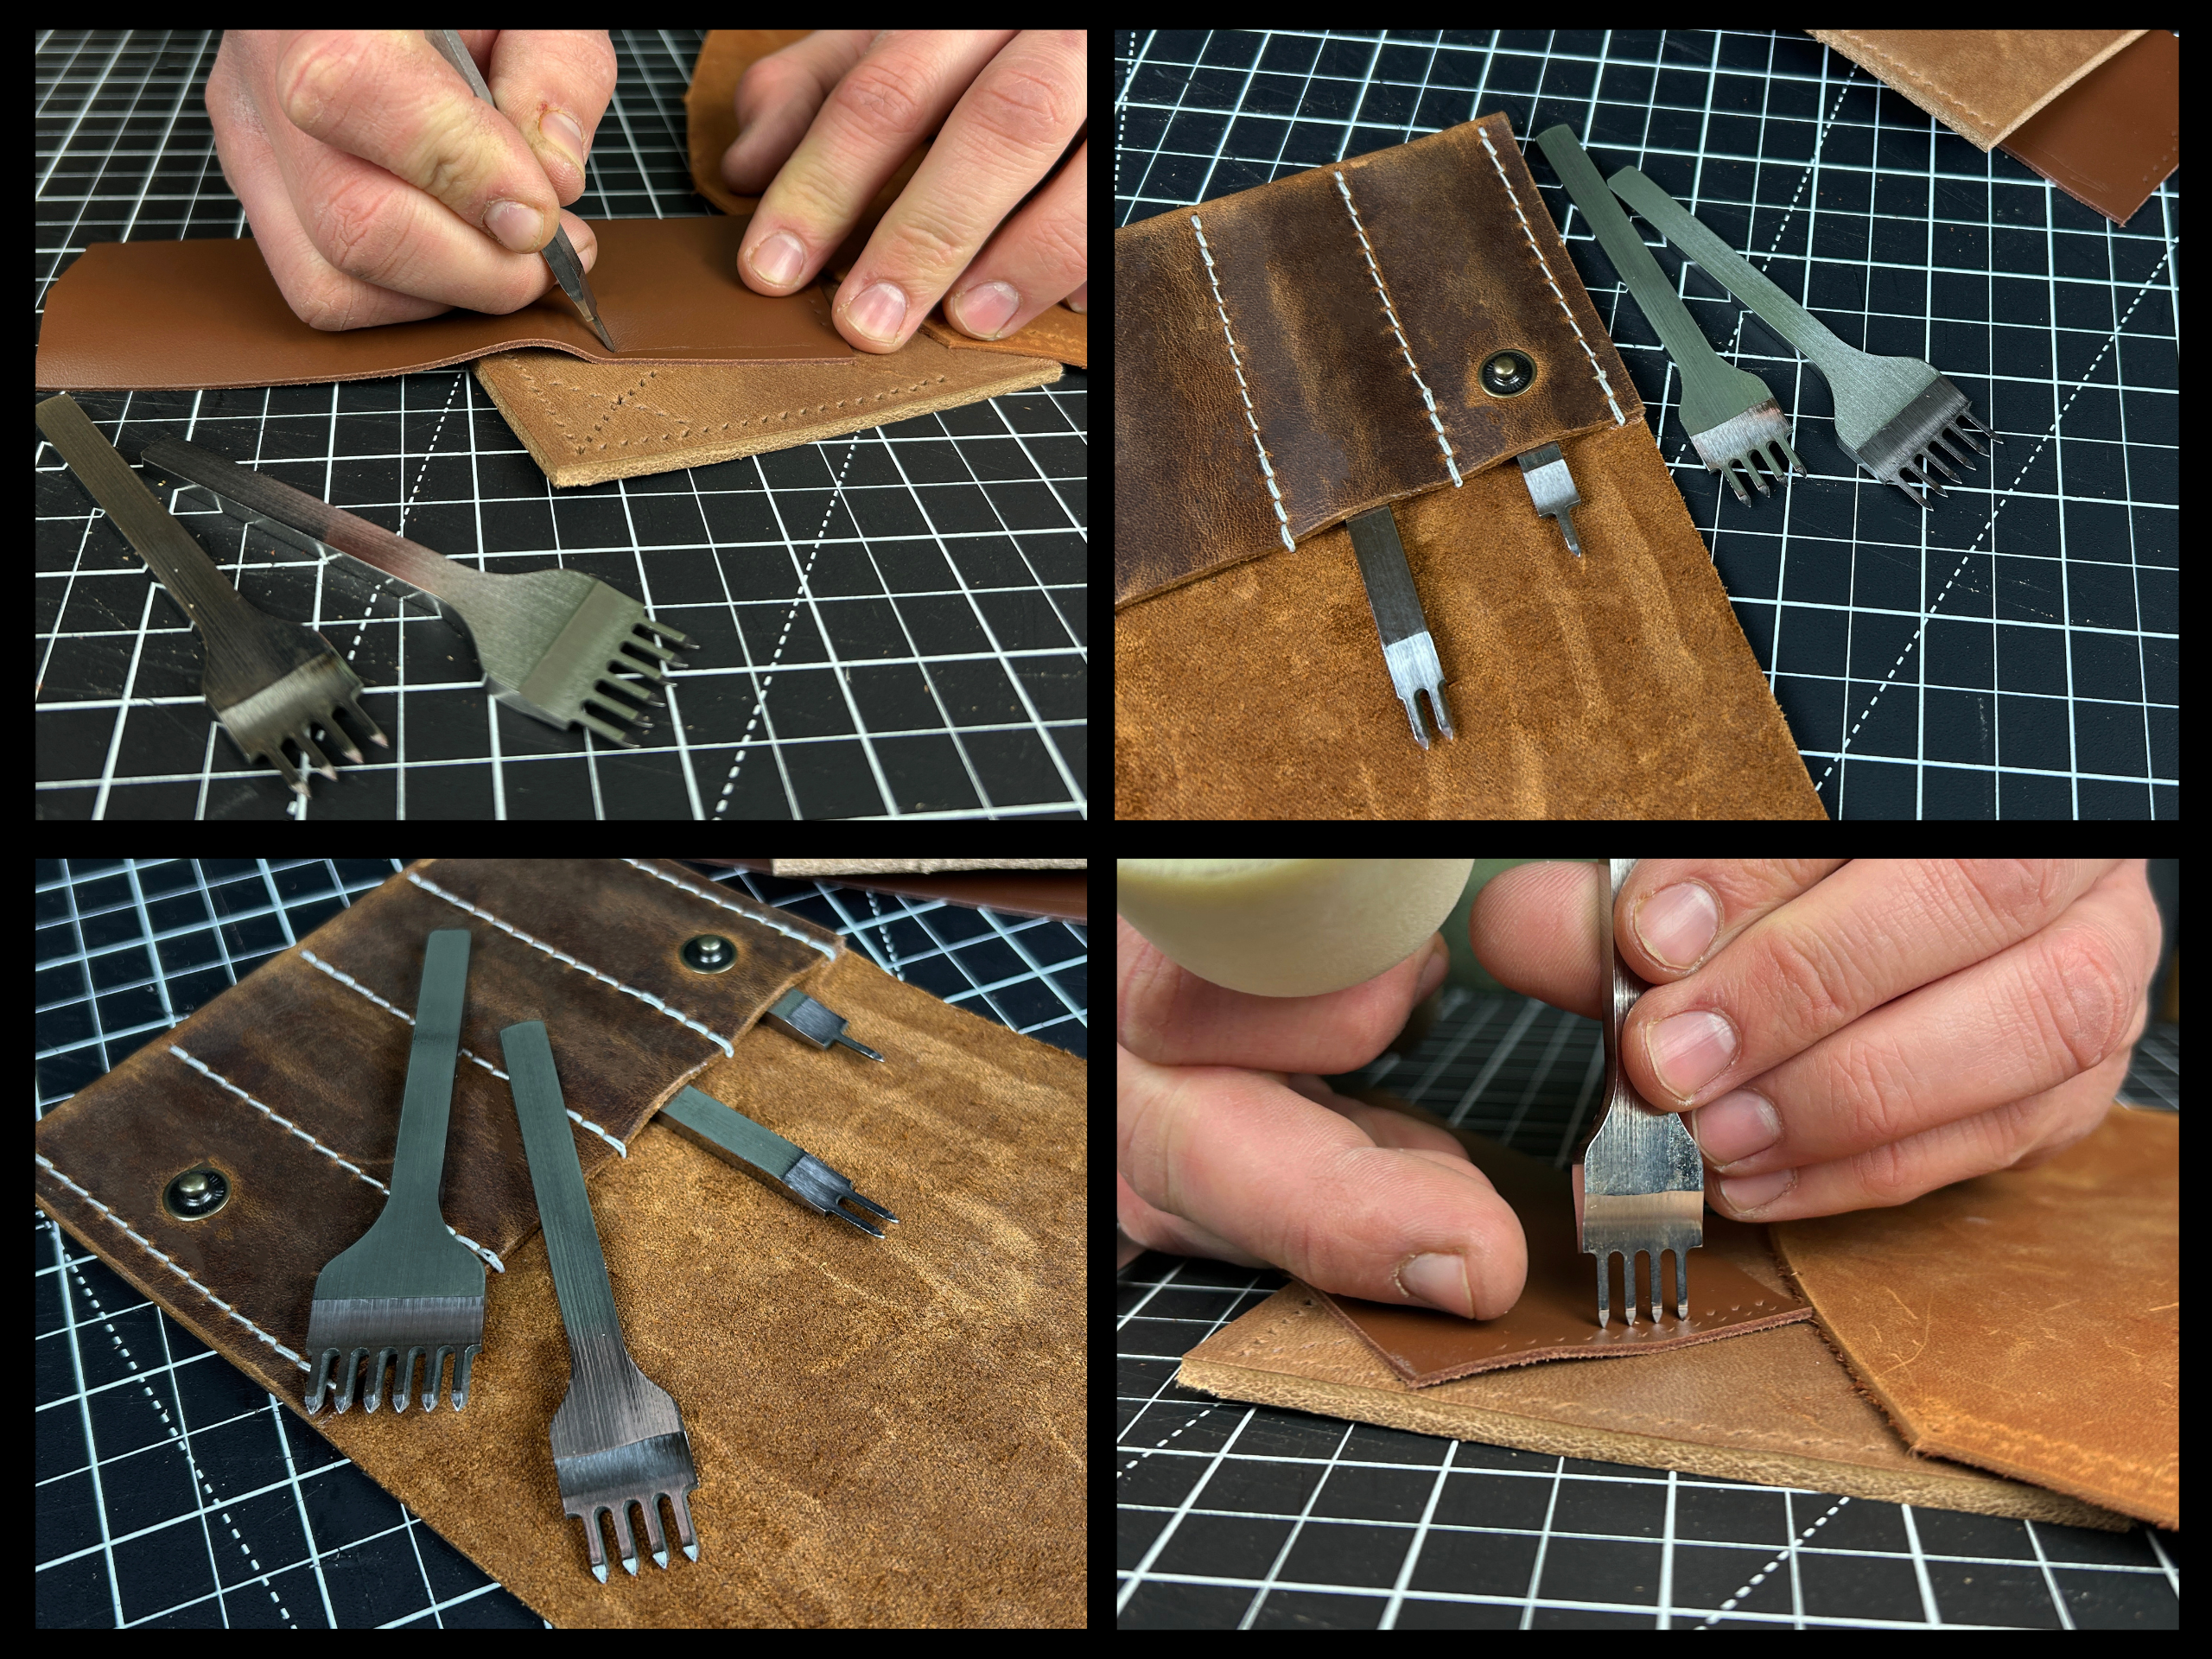 4-Piece Diamond Style Leather Pricking Iron Set, 1, 2, 3, 4 Prongs